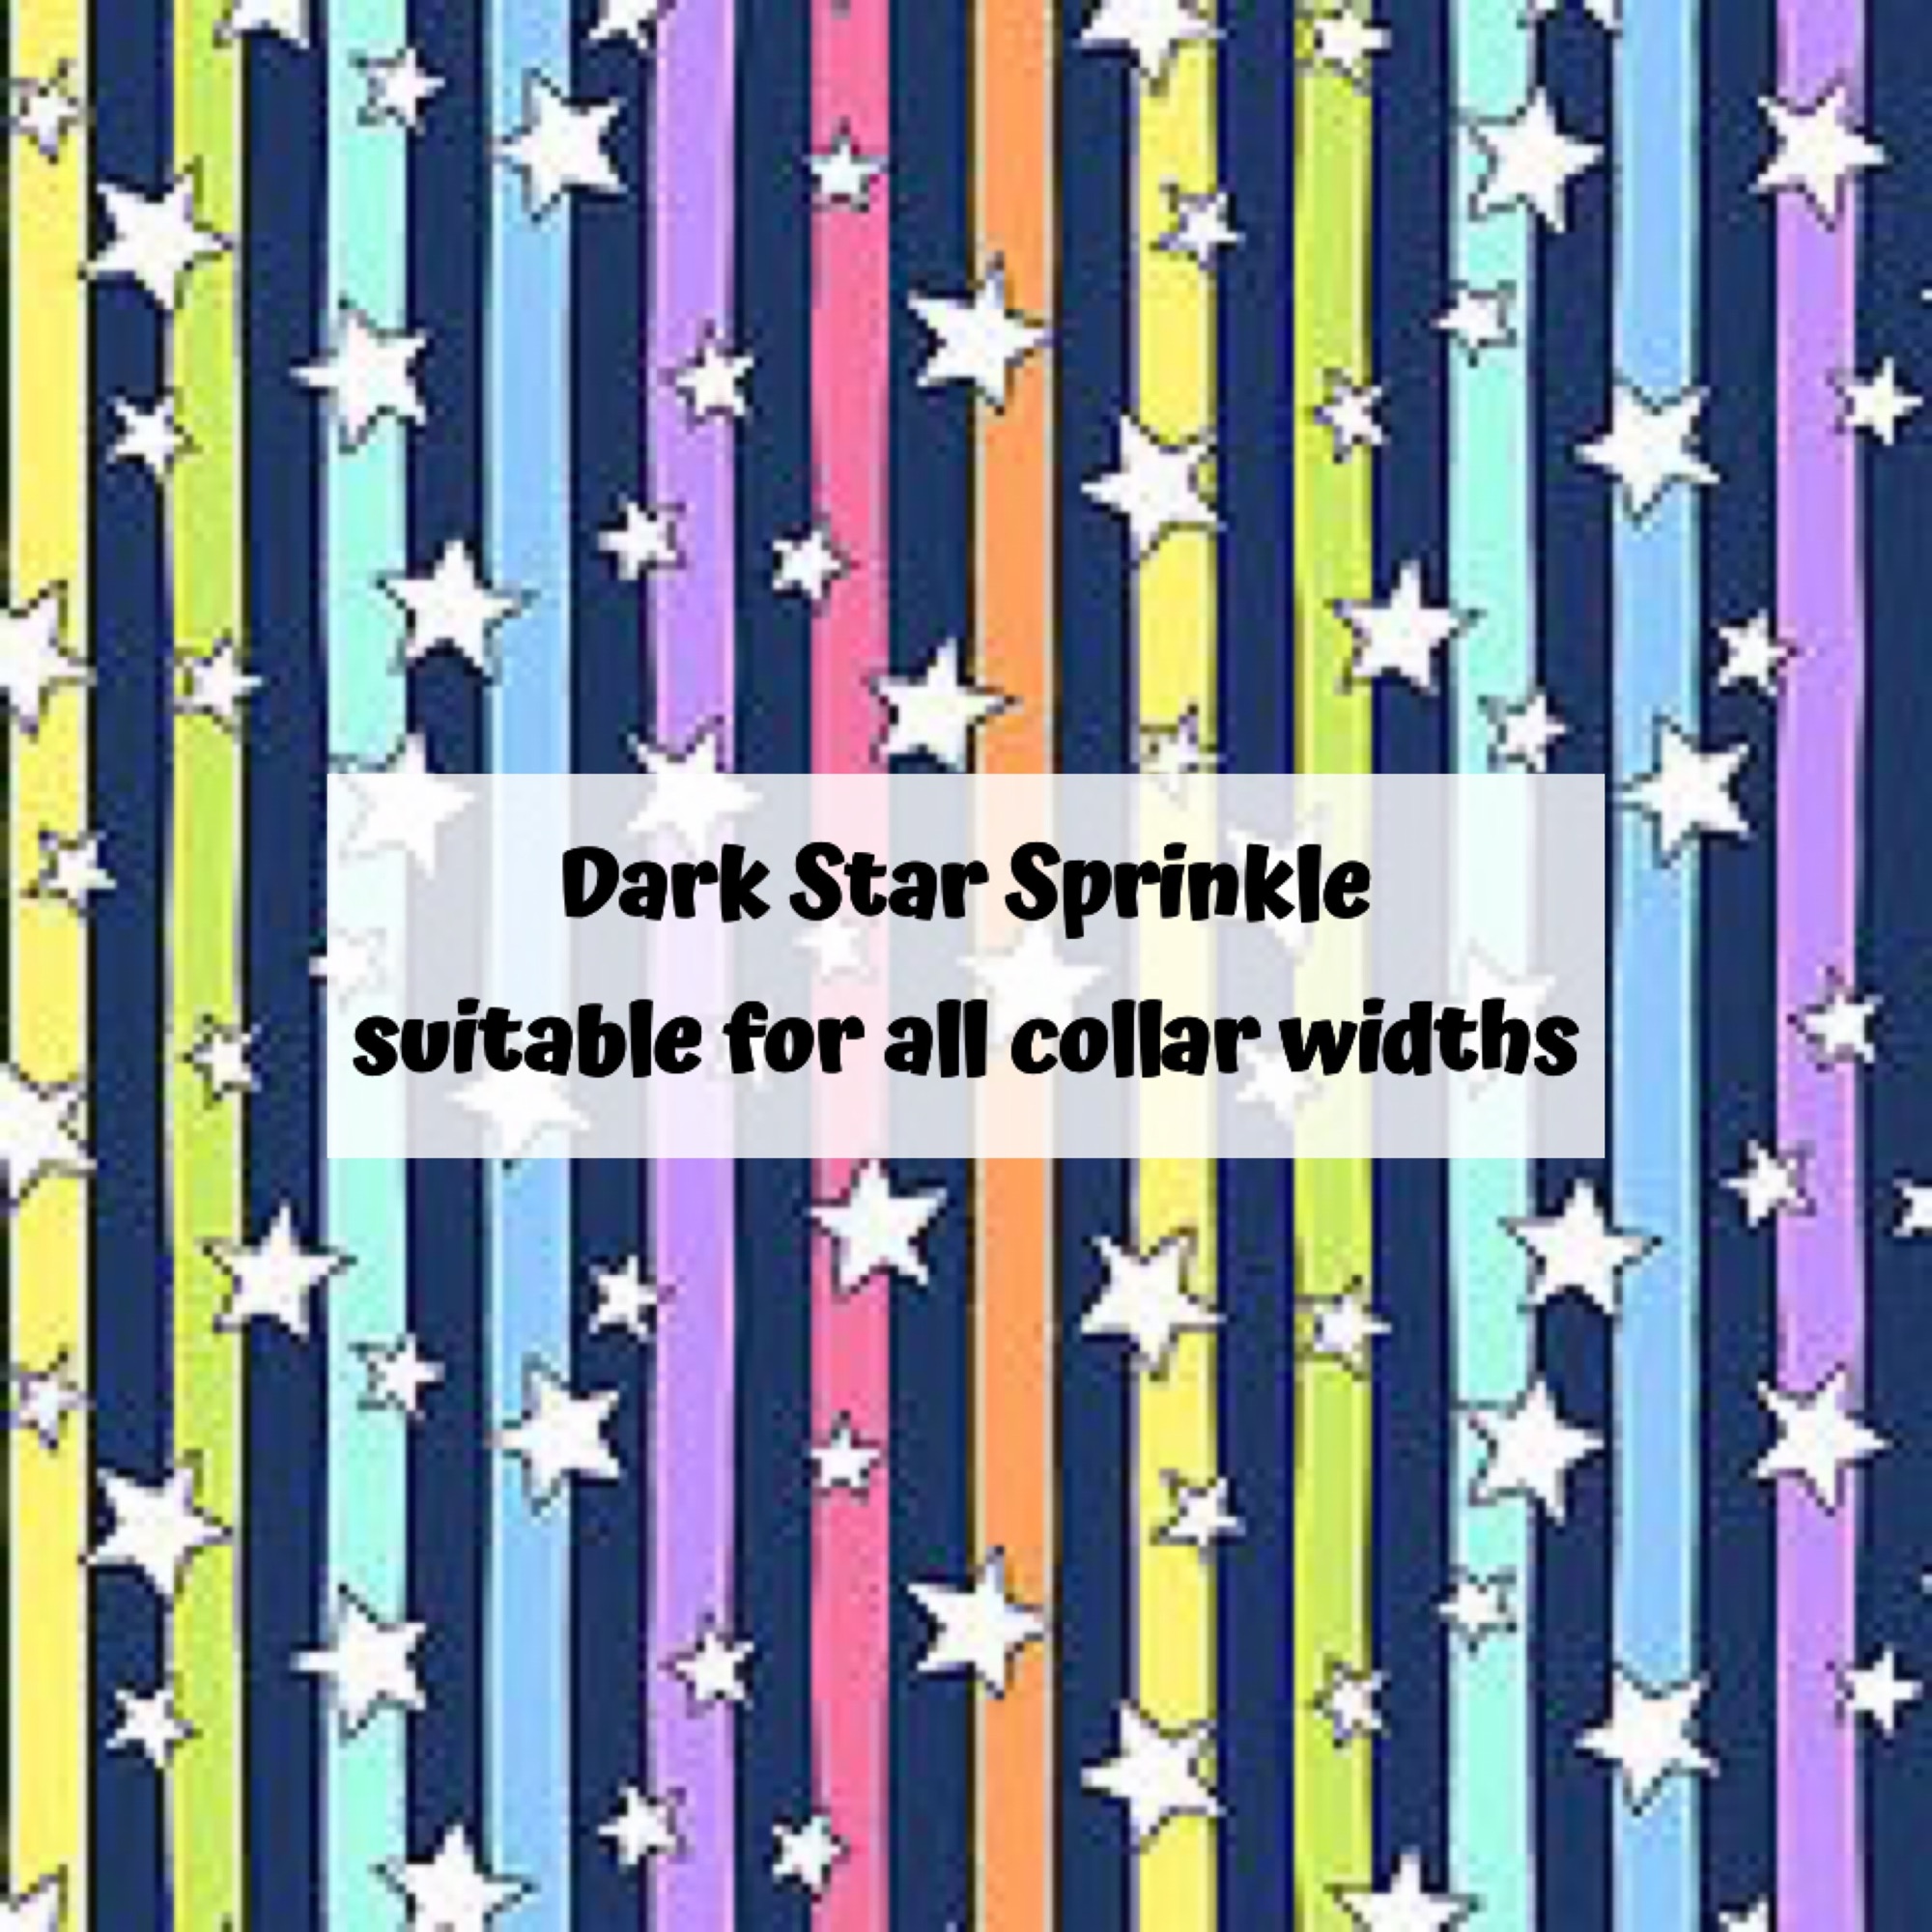 Dark Star Sprinkle